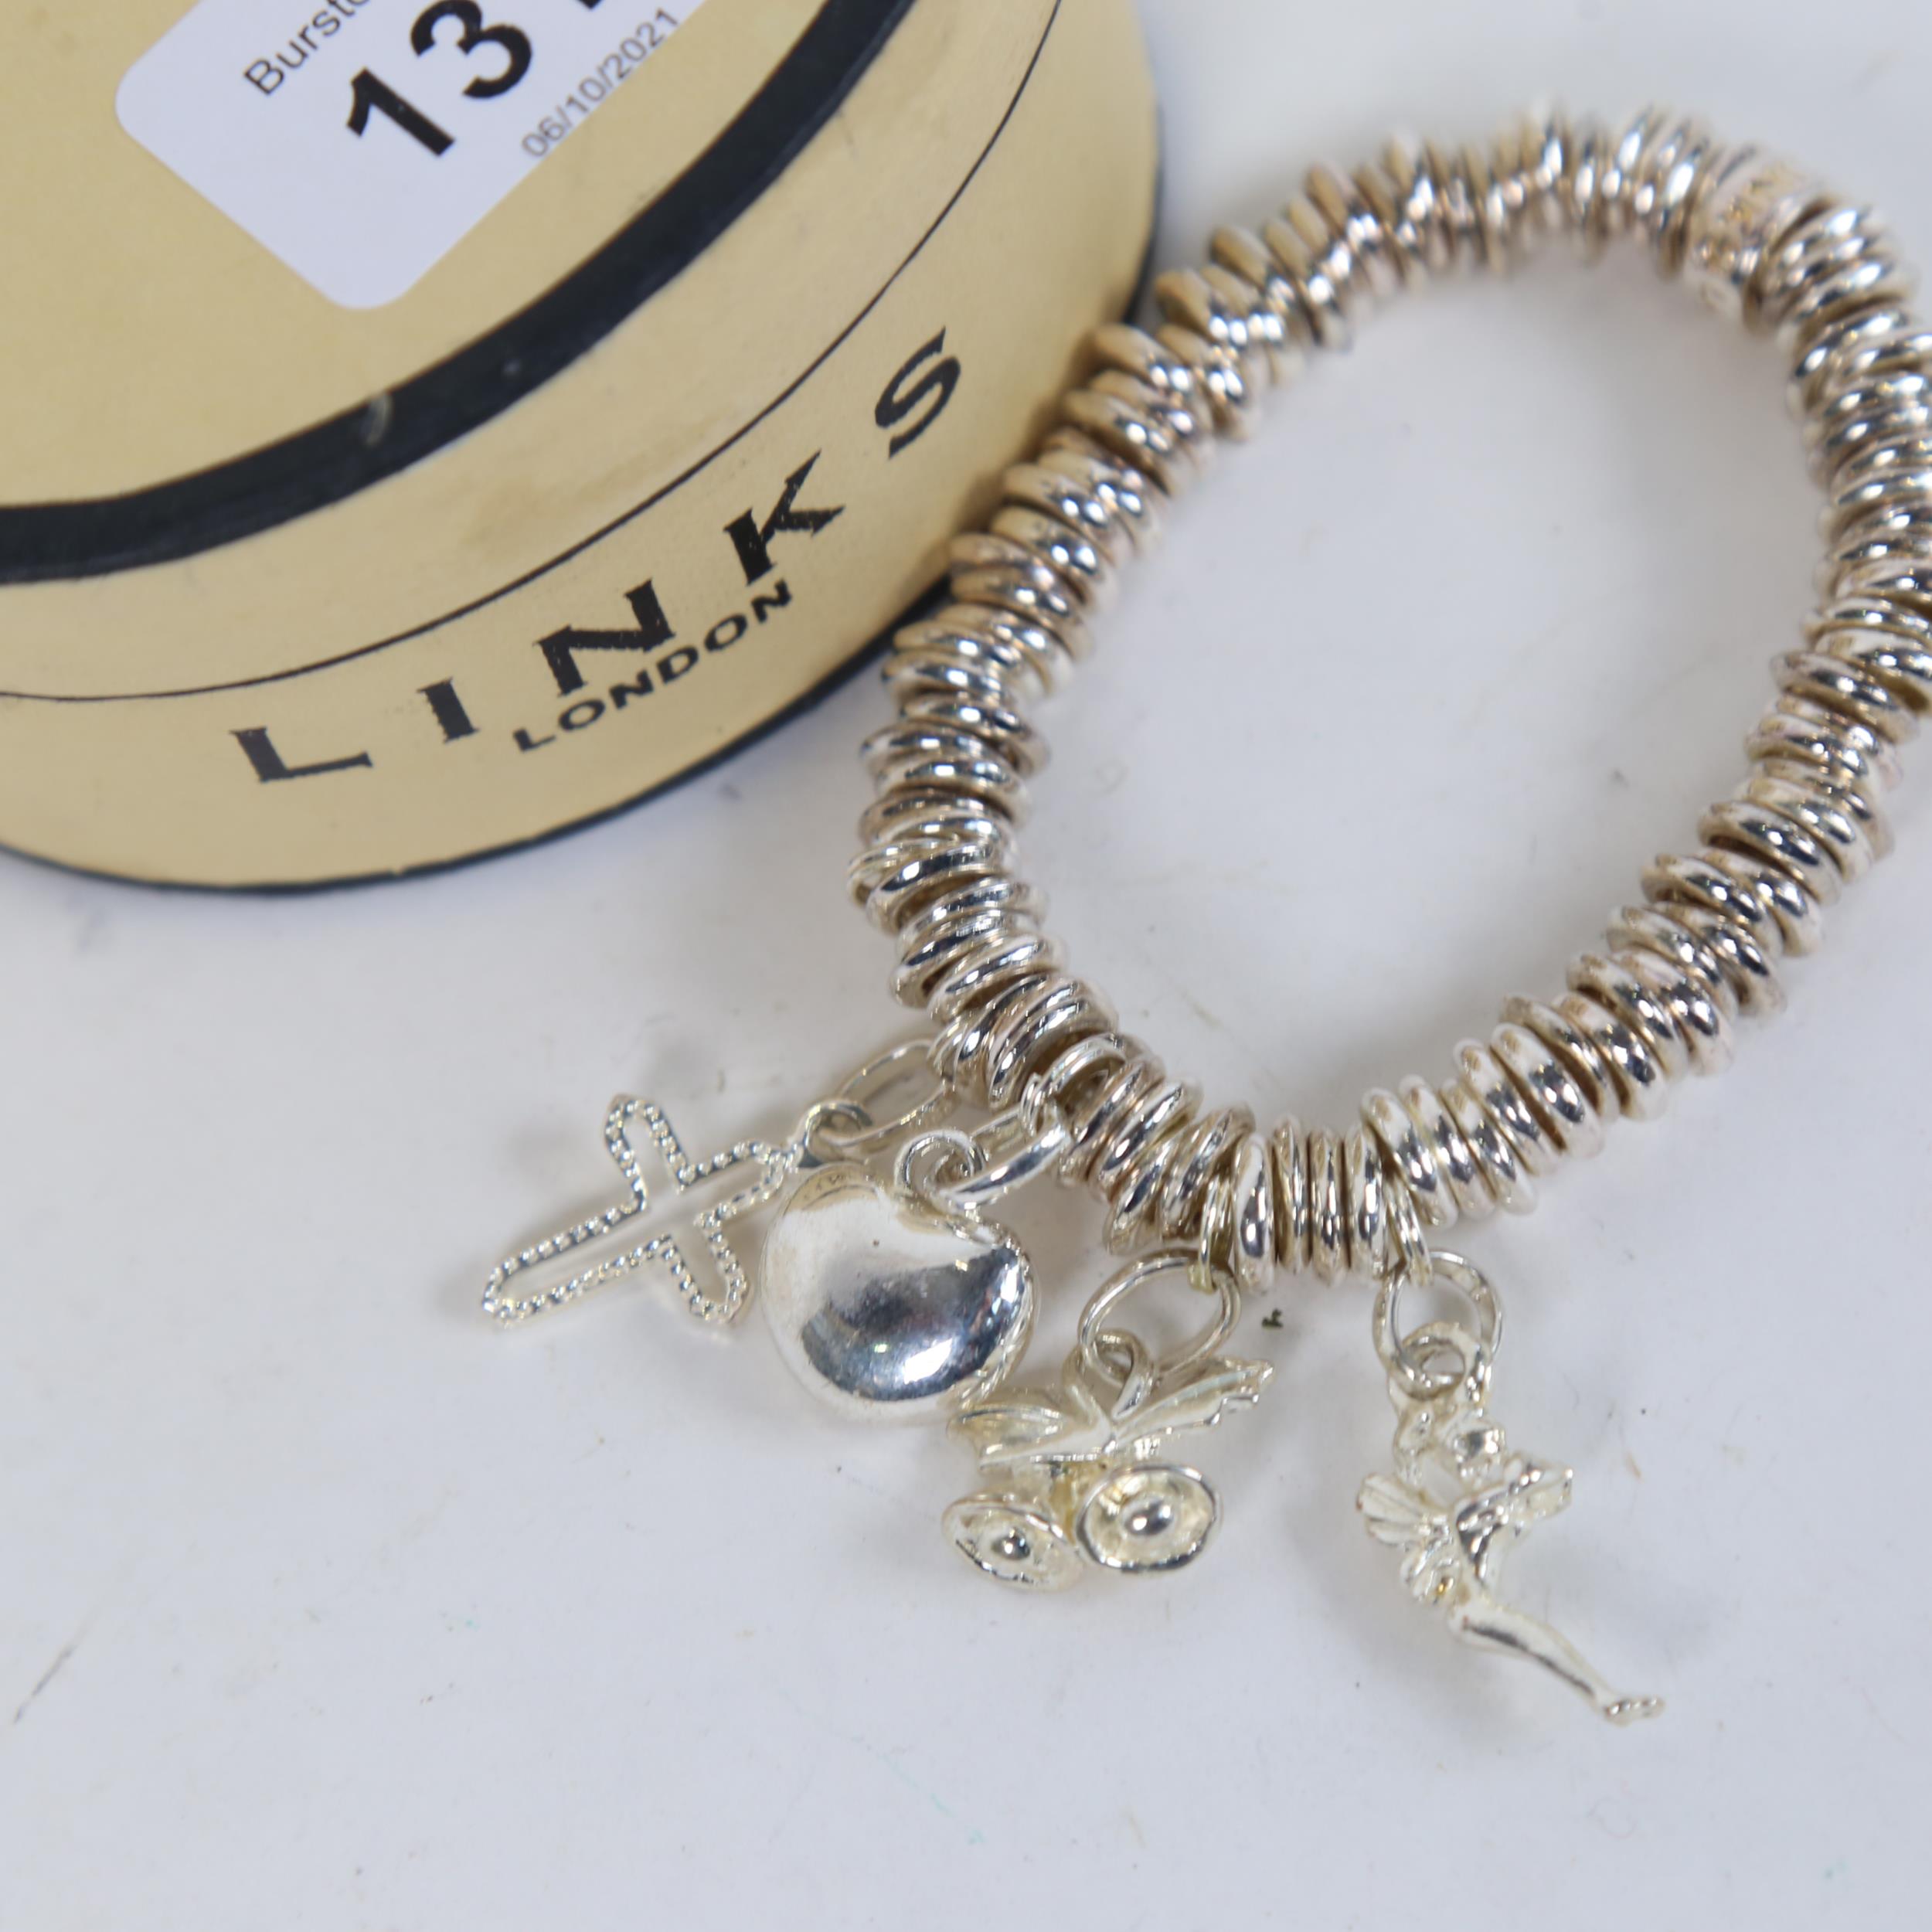 LINKS OF LONDON - a novelty charm bracelet, in original box - Image 2 of 2